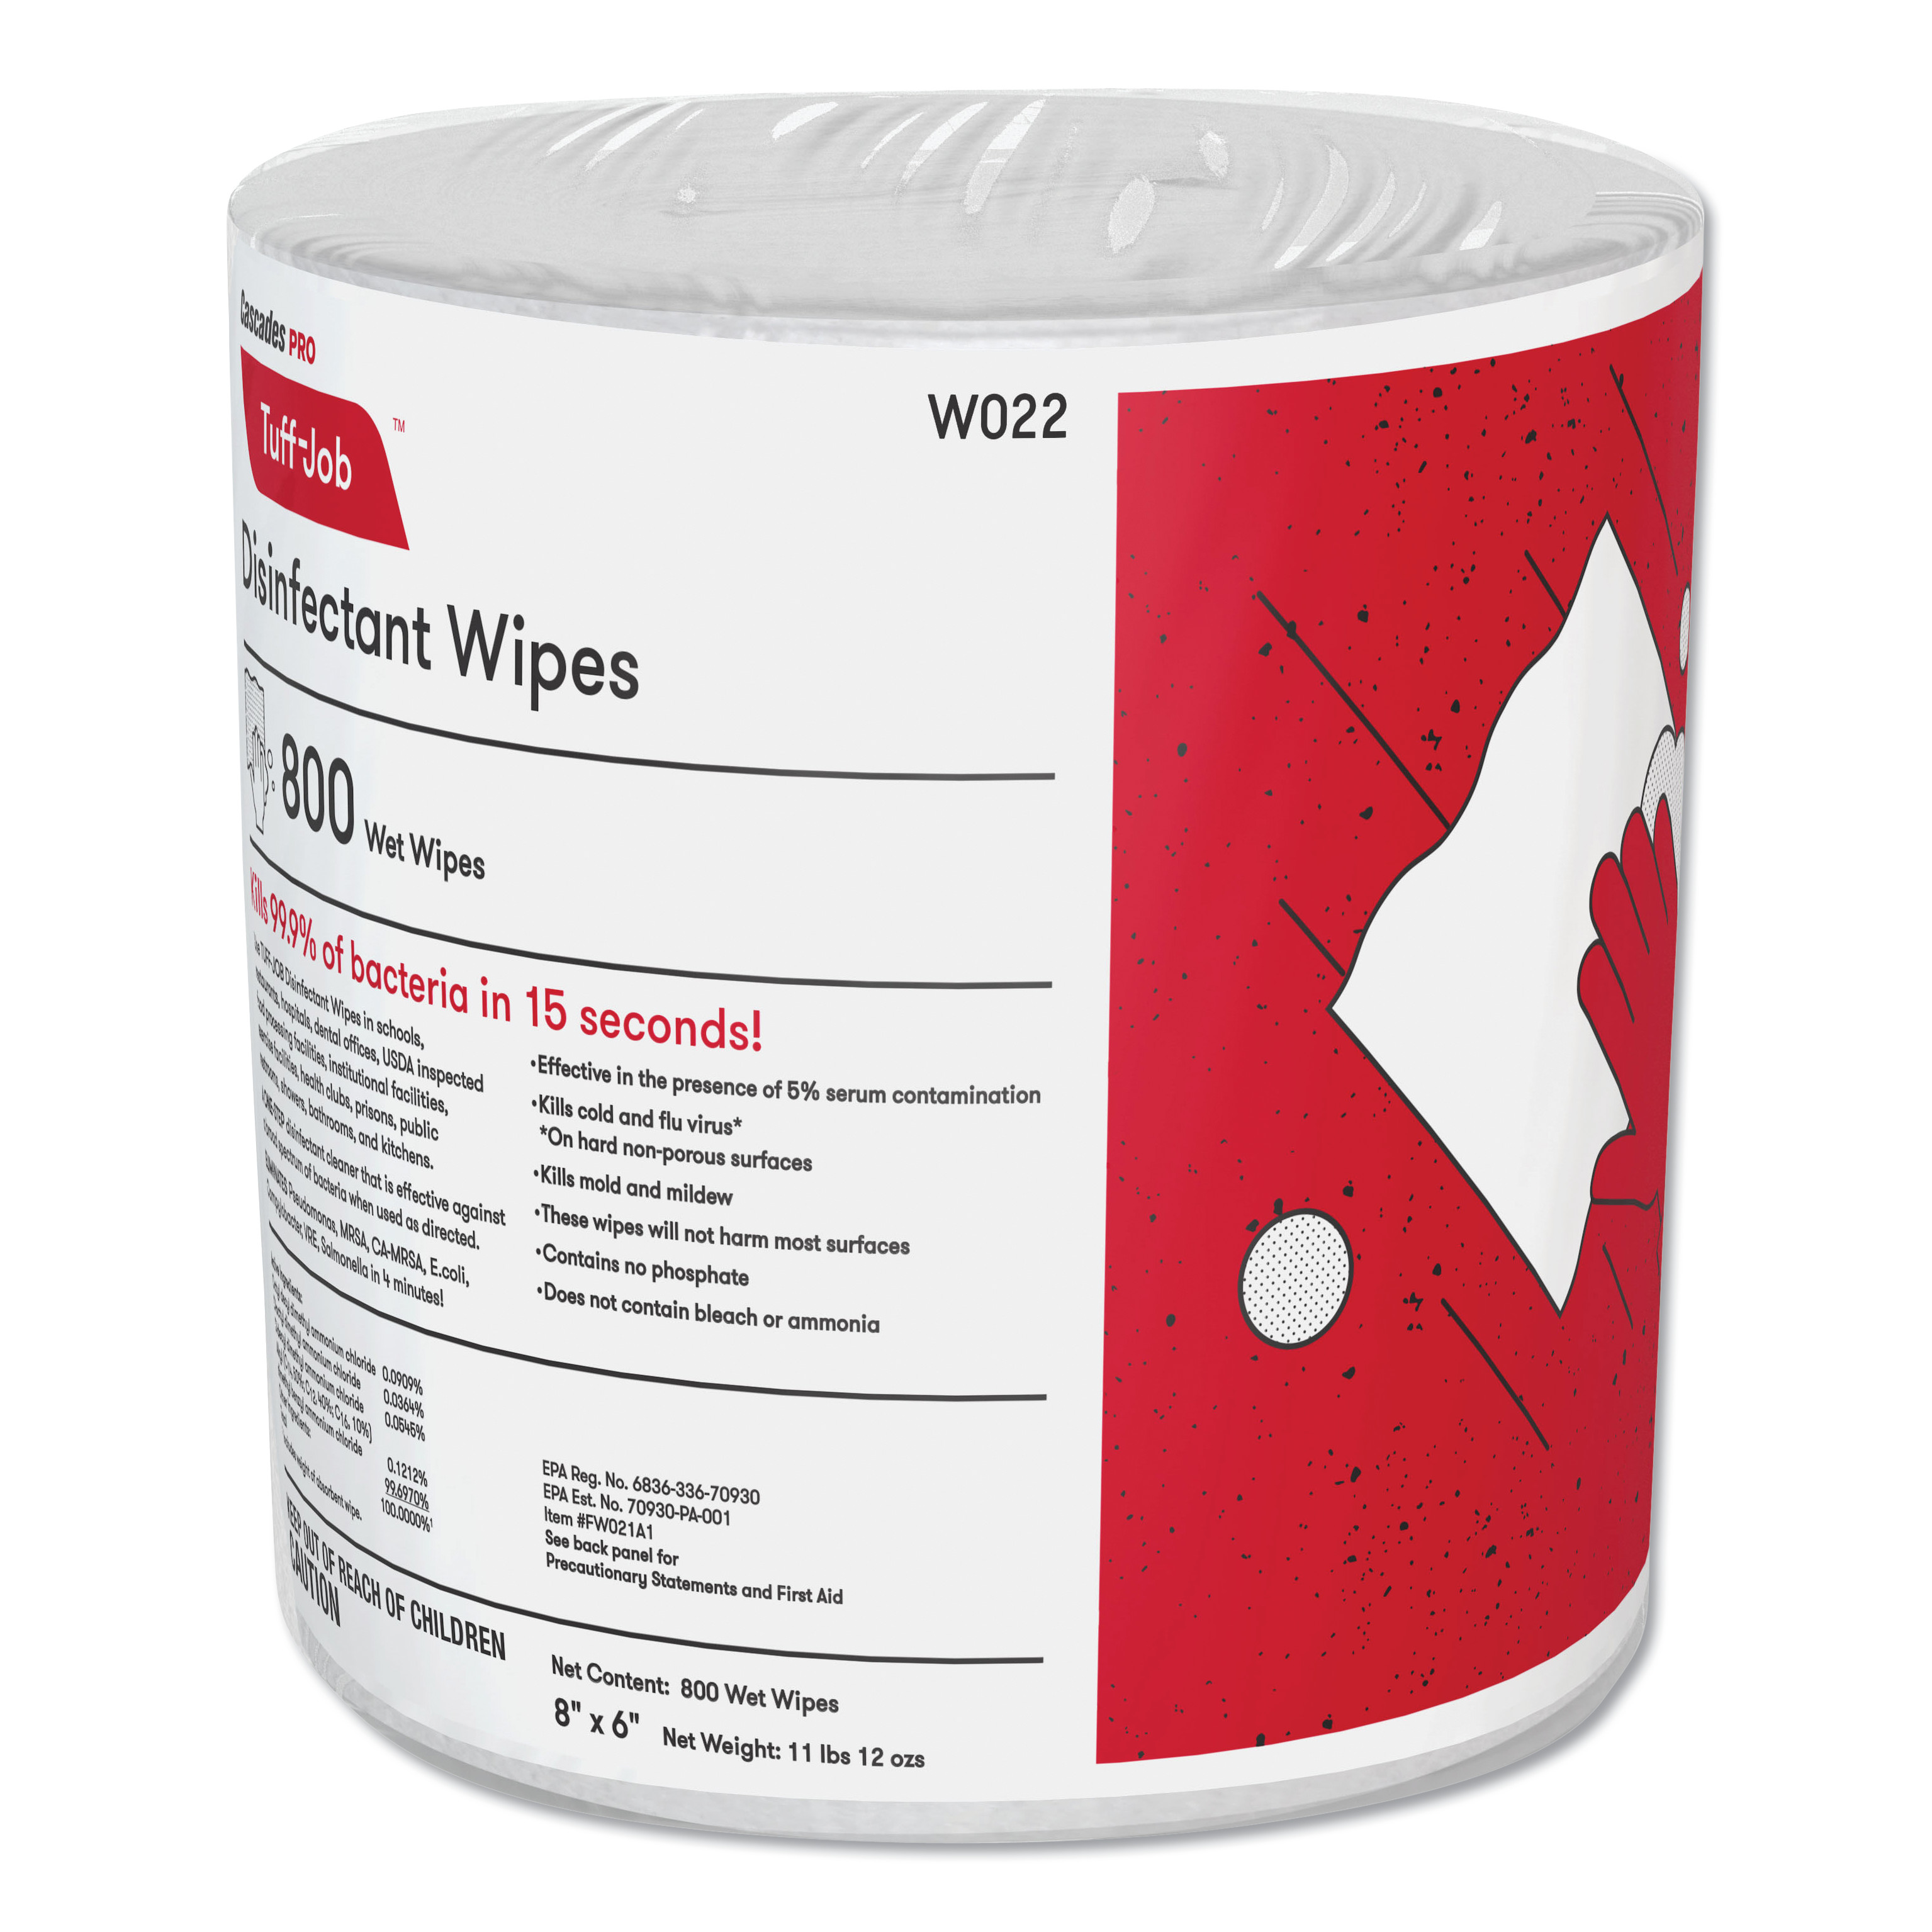  Cascades PRO W022 Tuff-Job Disinfectant Wet Wipes, 6 x 8, White, 800/Roll, 2 Rolls/Carton (CSDW022) 